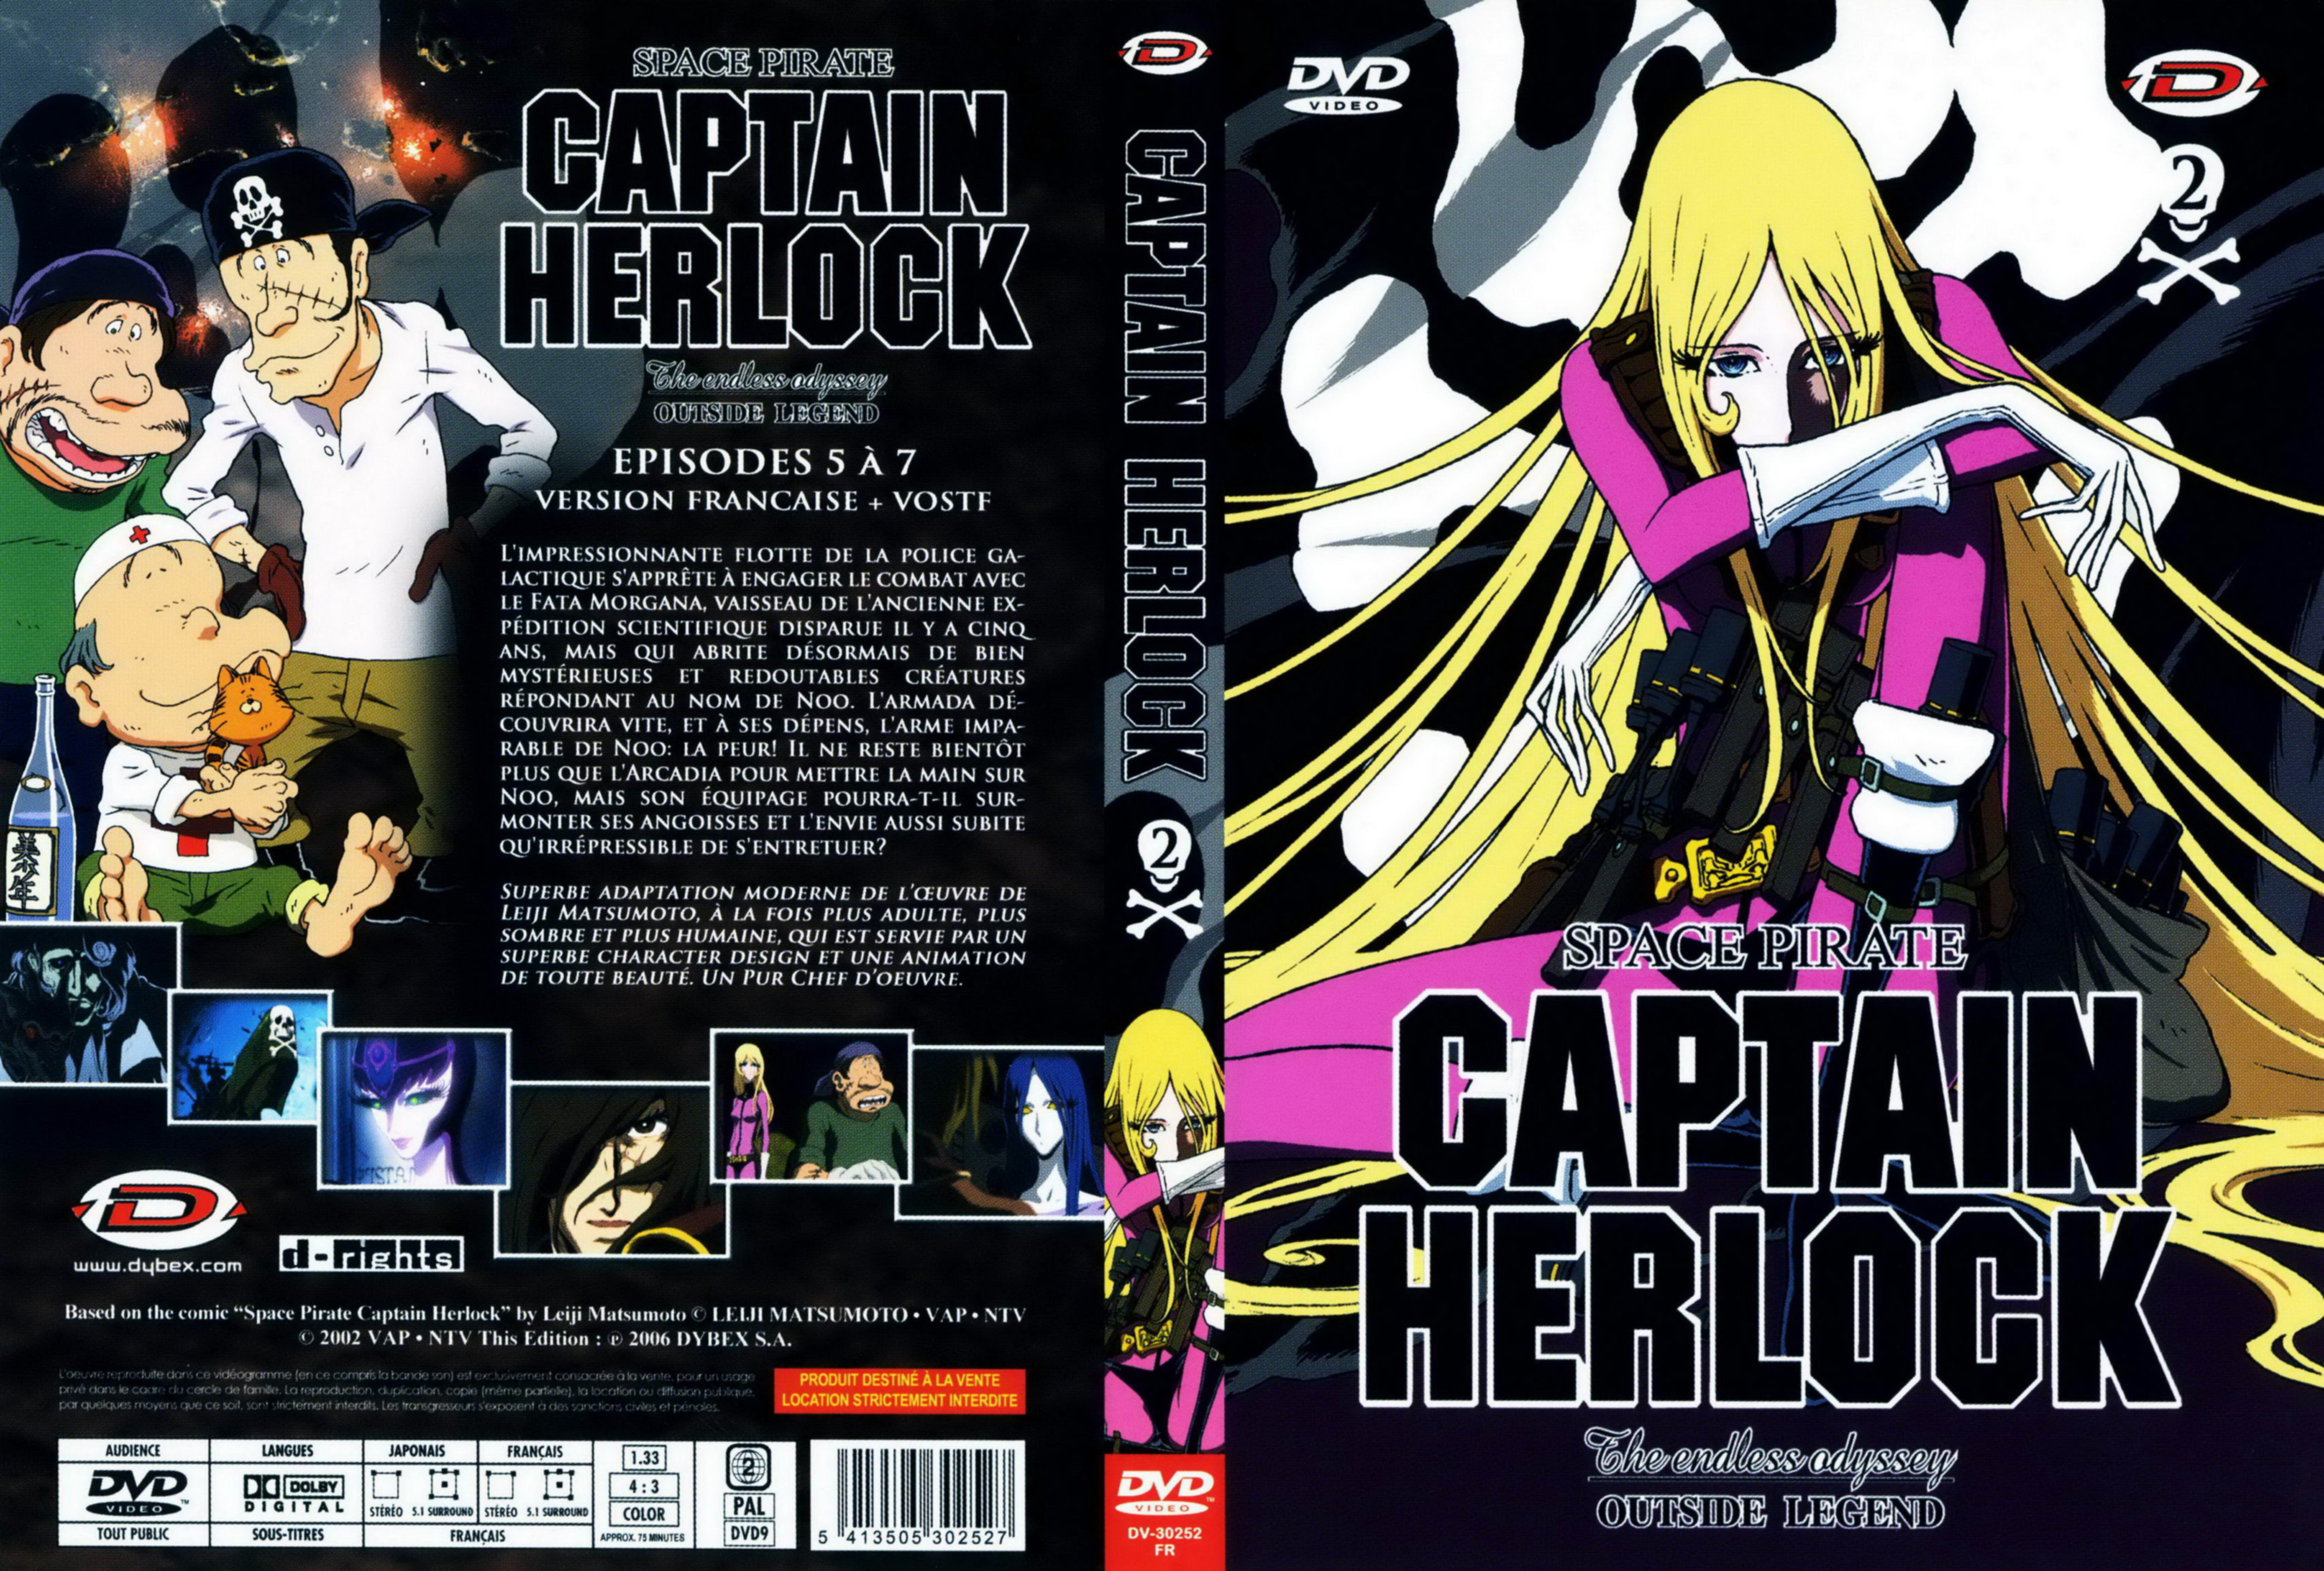 Jaquette DVD Captain Herlock The endless odyssey DVD 2